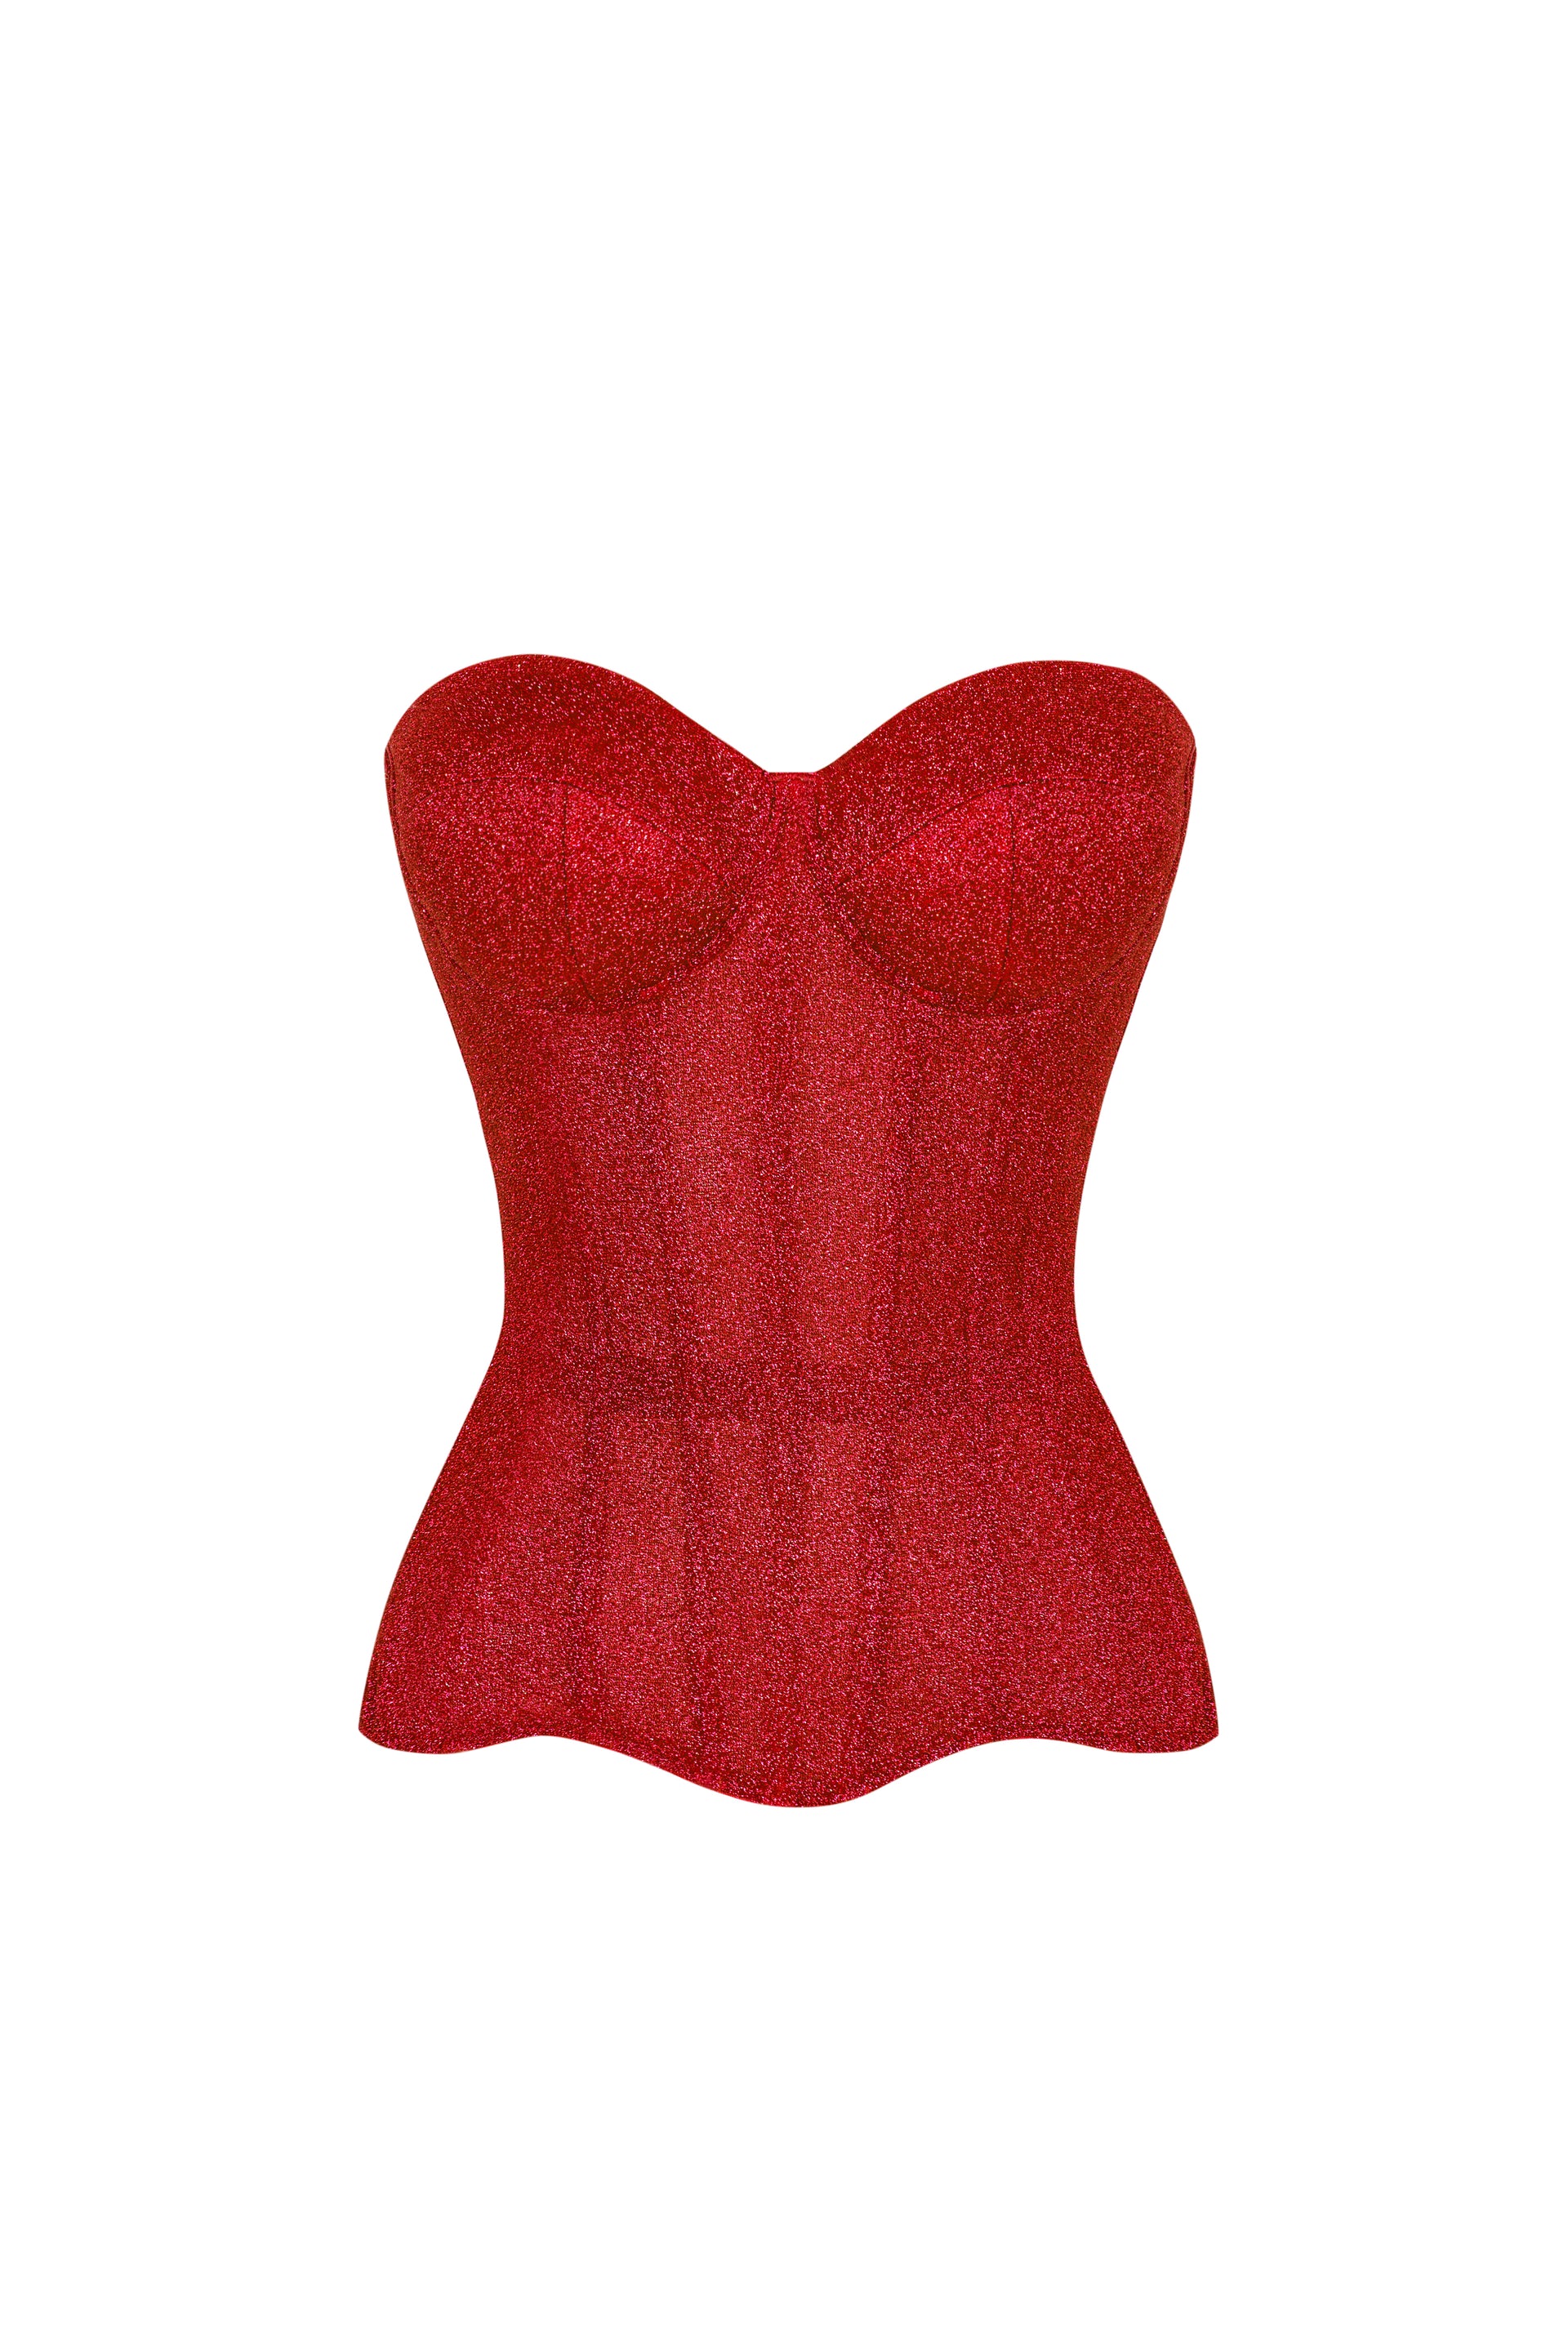 Brilliance drop Red corset